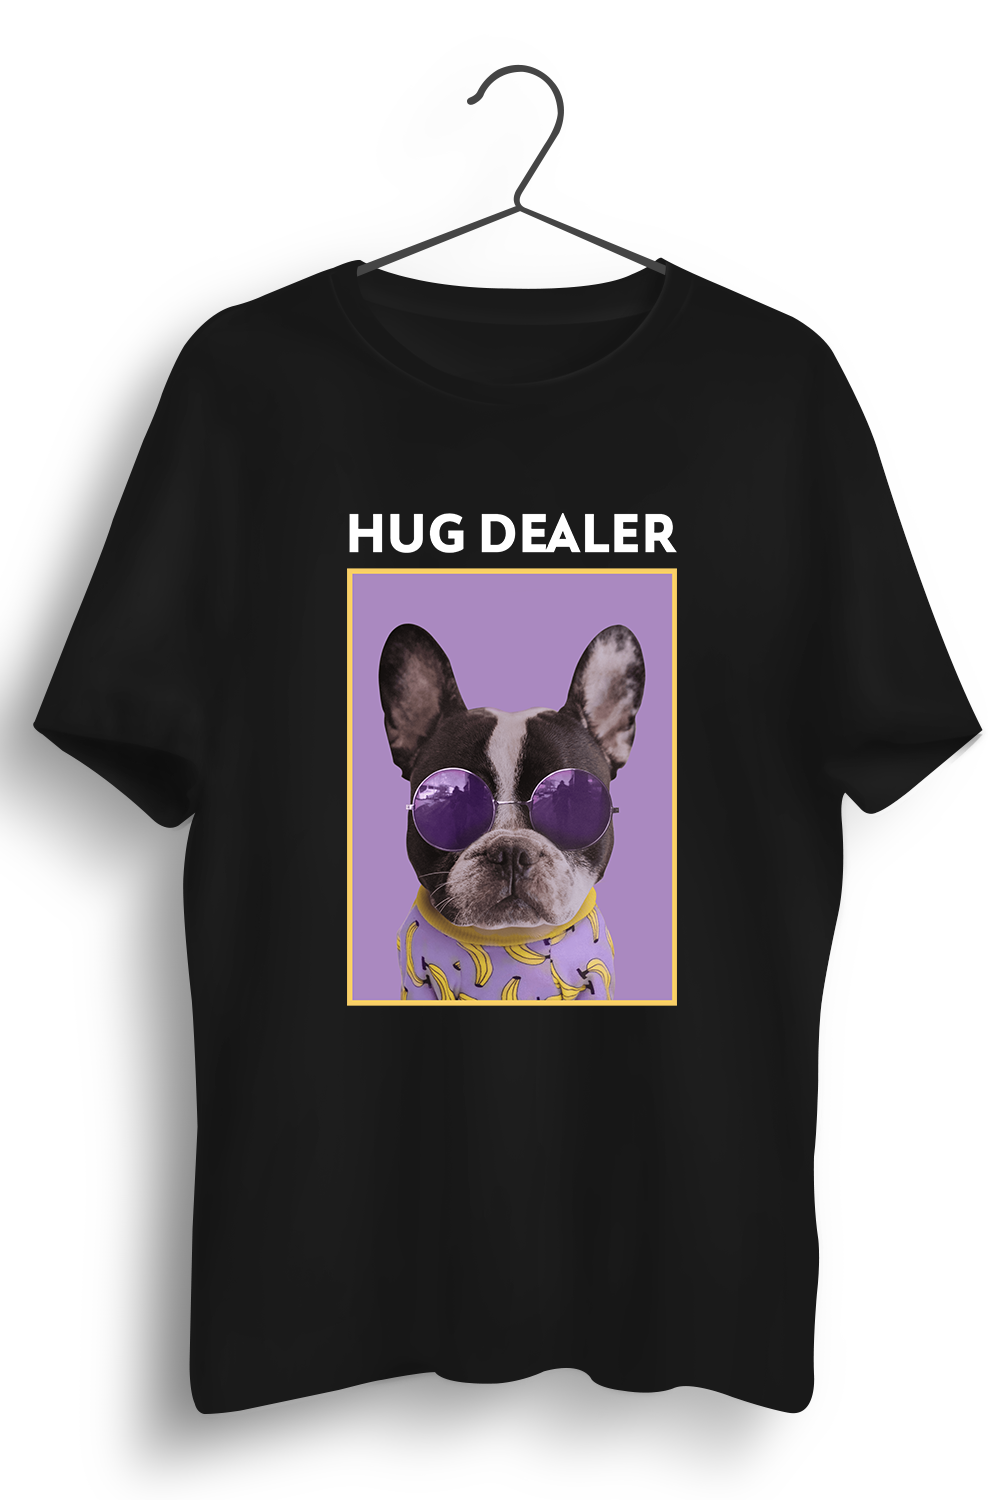 Paytm Exclusive - Hug Dealer Graphic Printed Black Tshirt